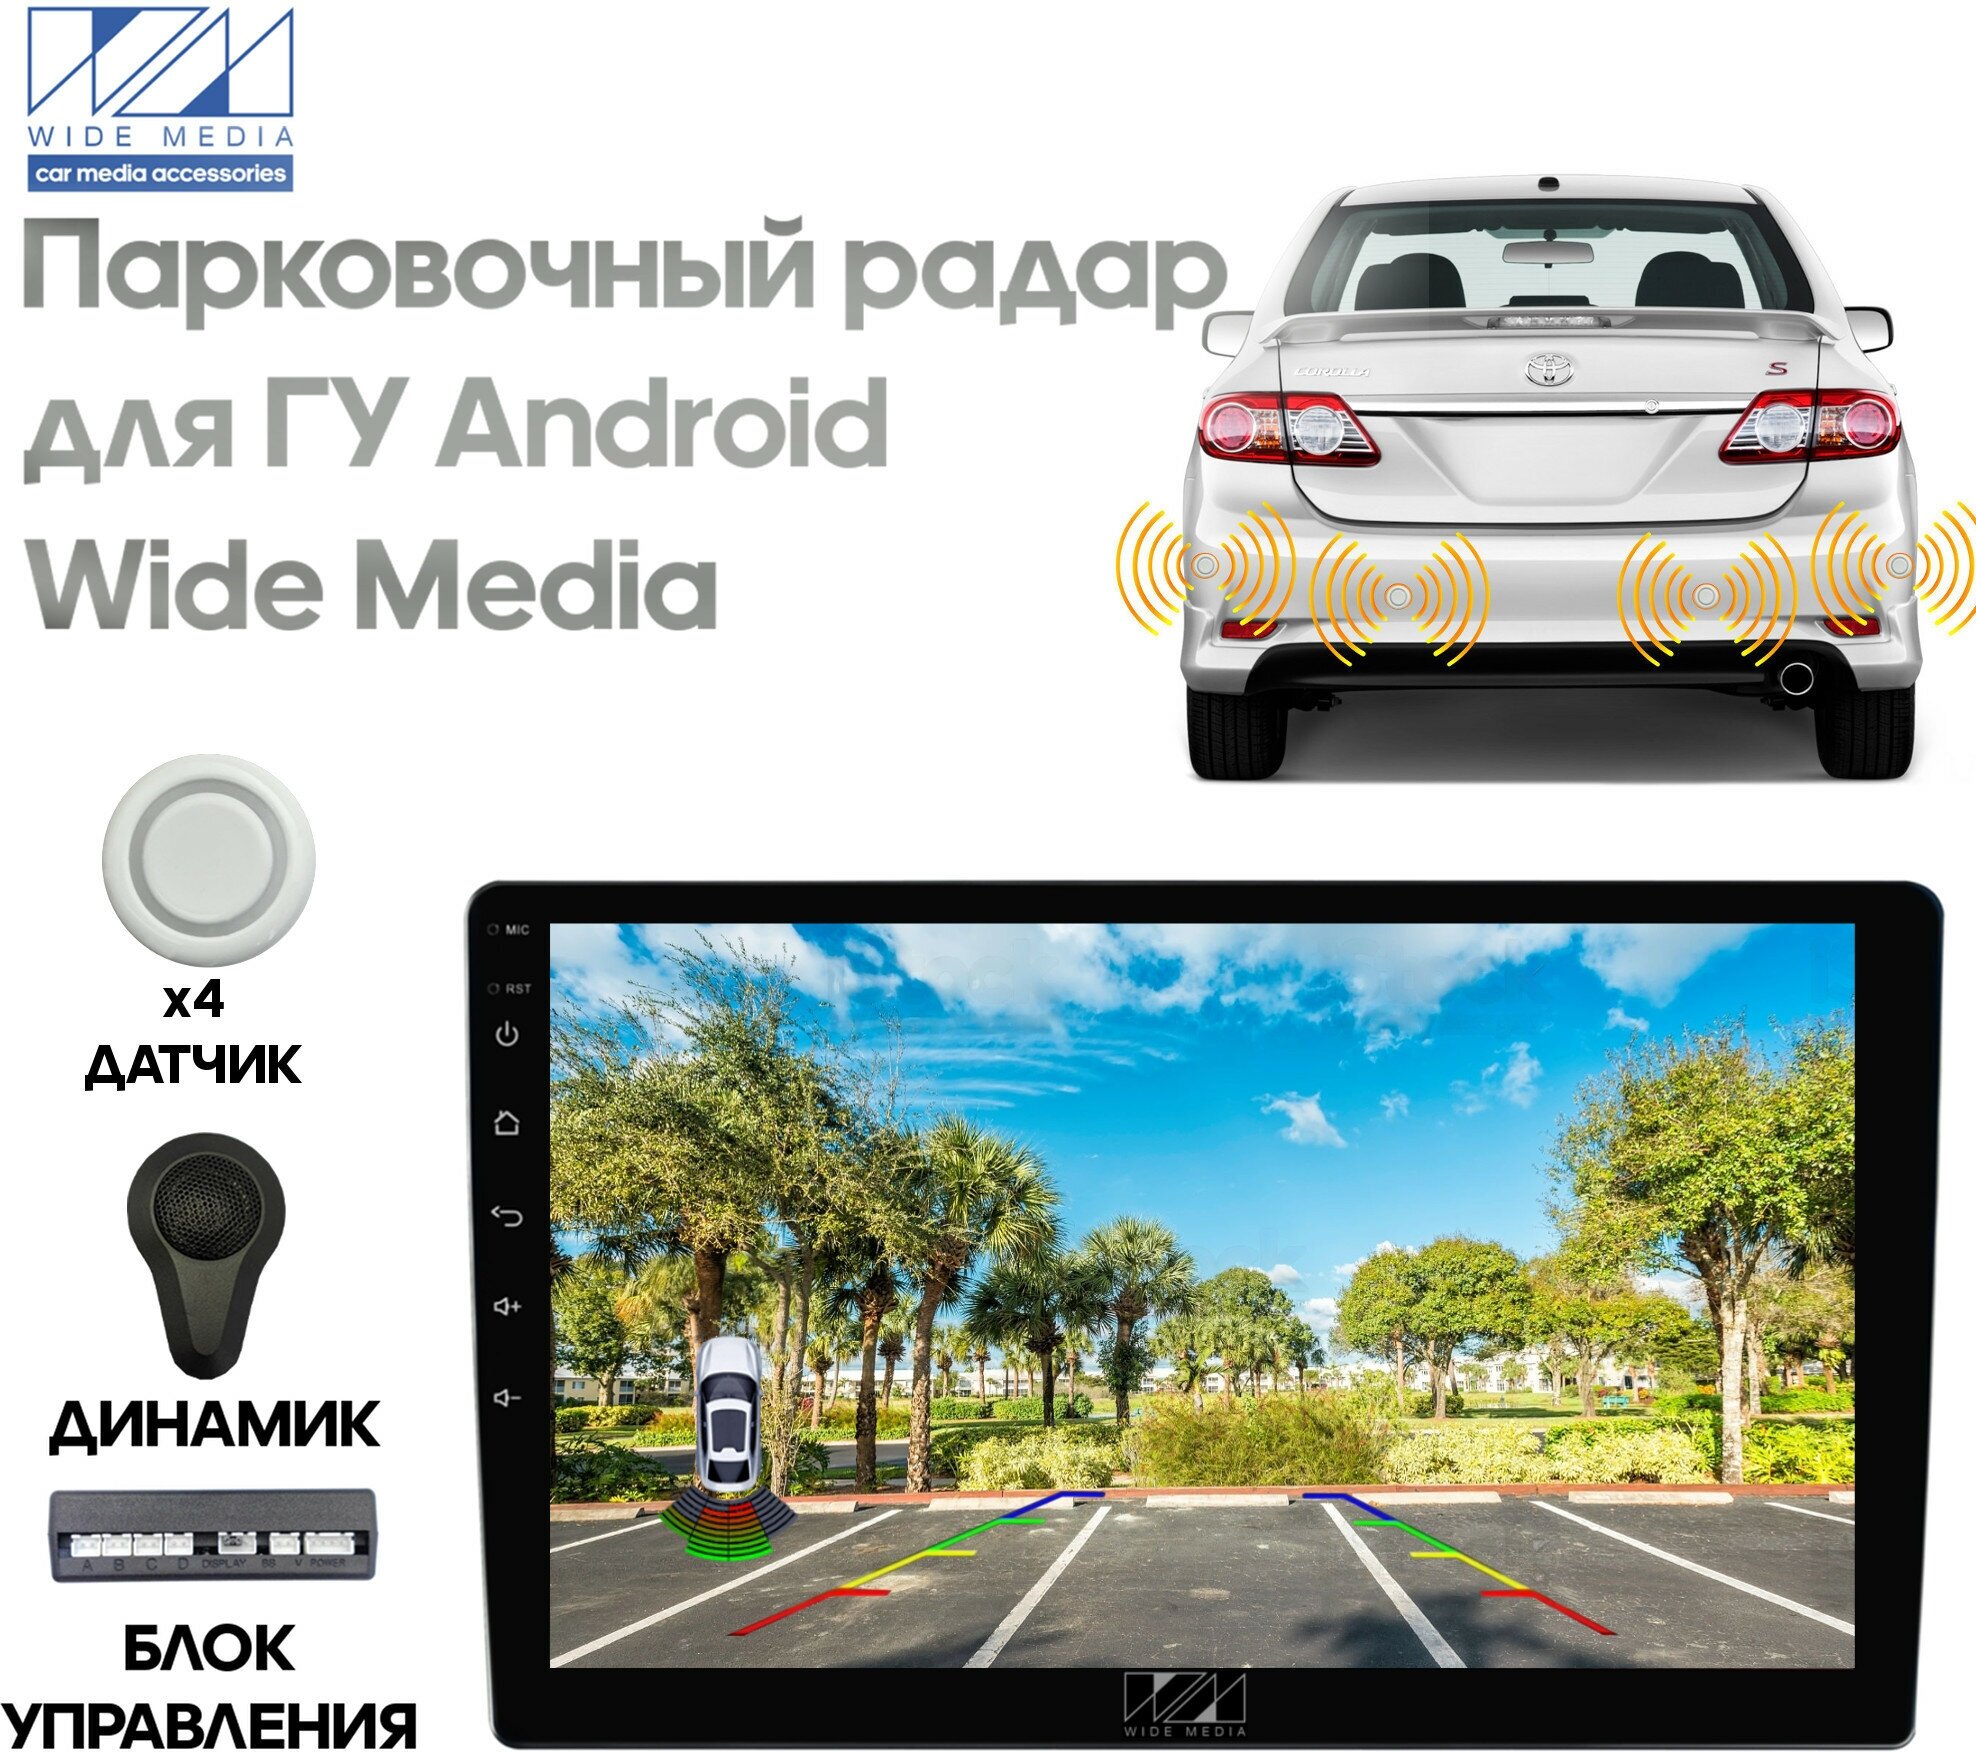 Парковочный радар Wide Media APS-114WH (в задний бамп, для ГУ Android, 4 дат. врез, бел.)